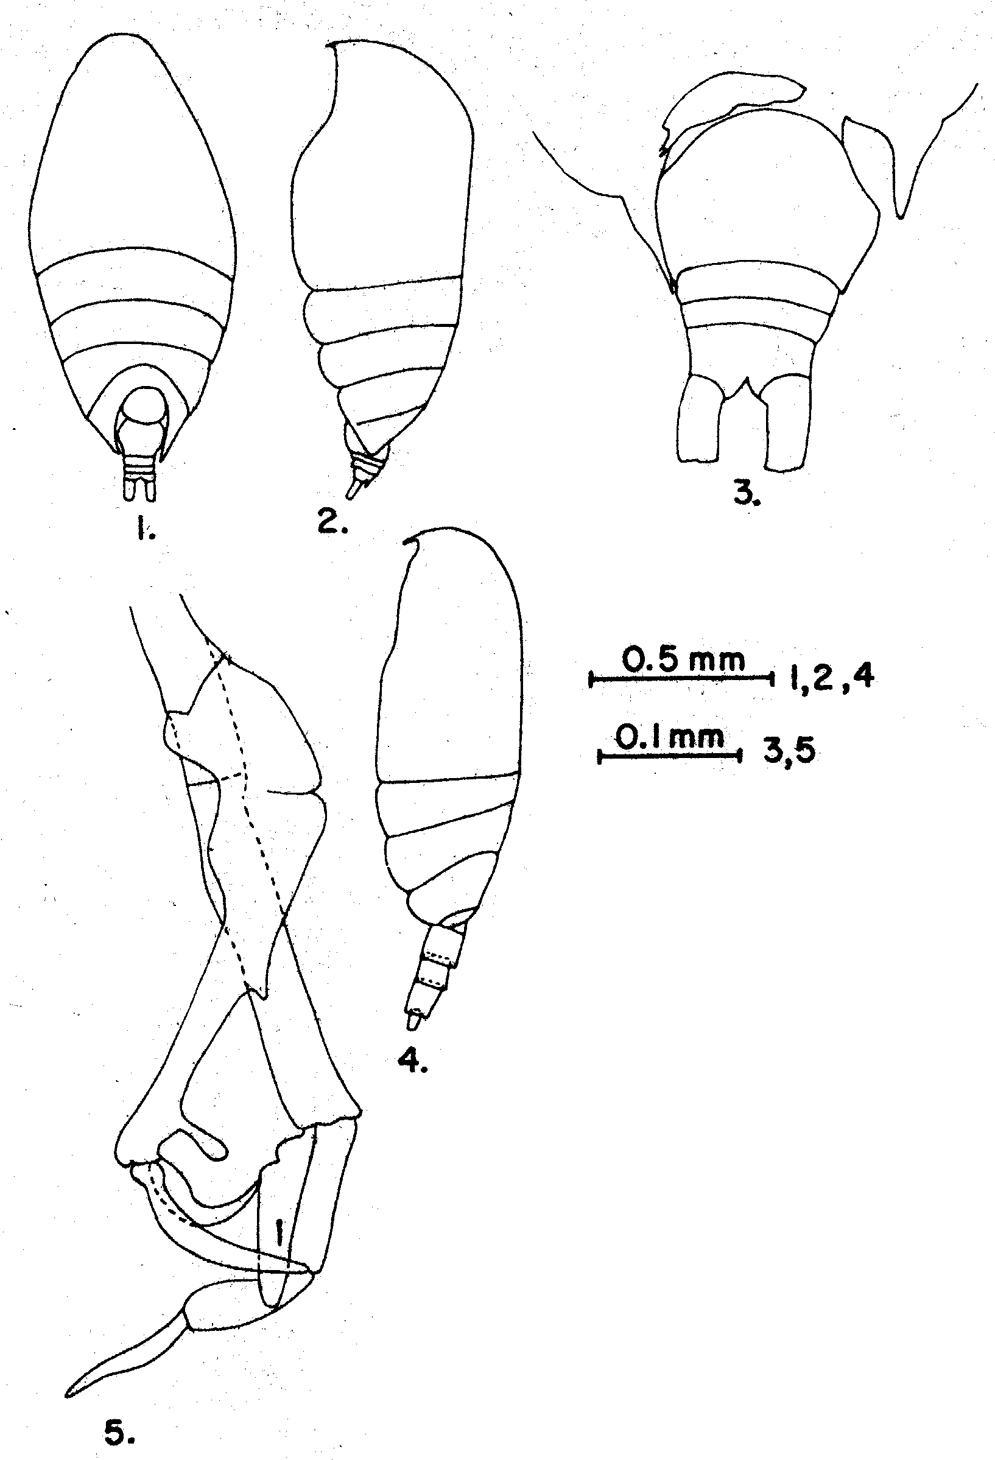 Species Scolecithrix bradyi - Plate 18 of morphological figures